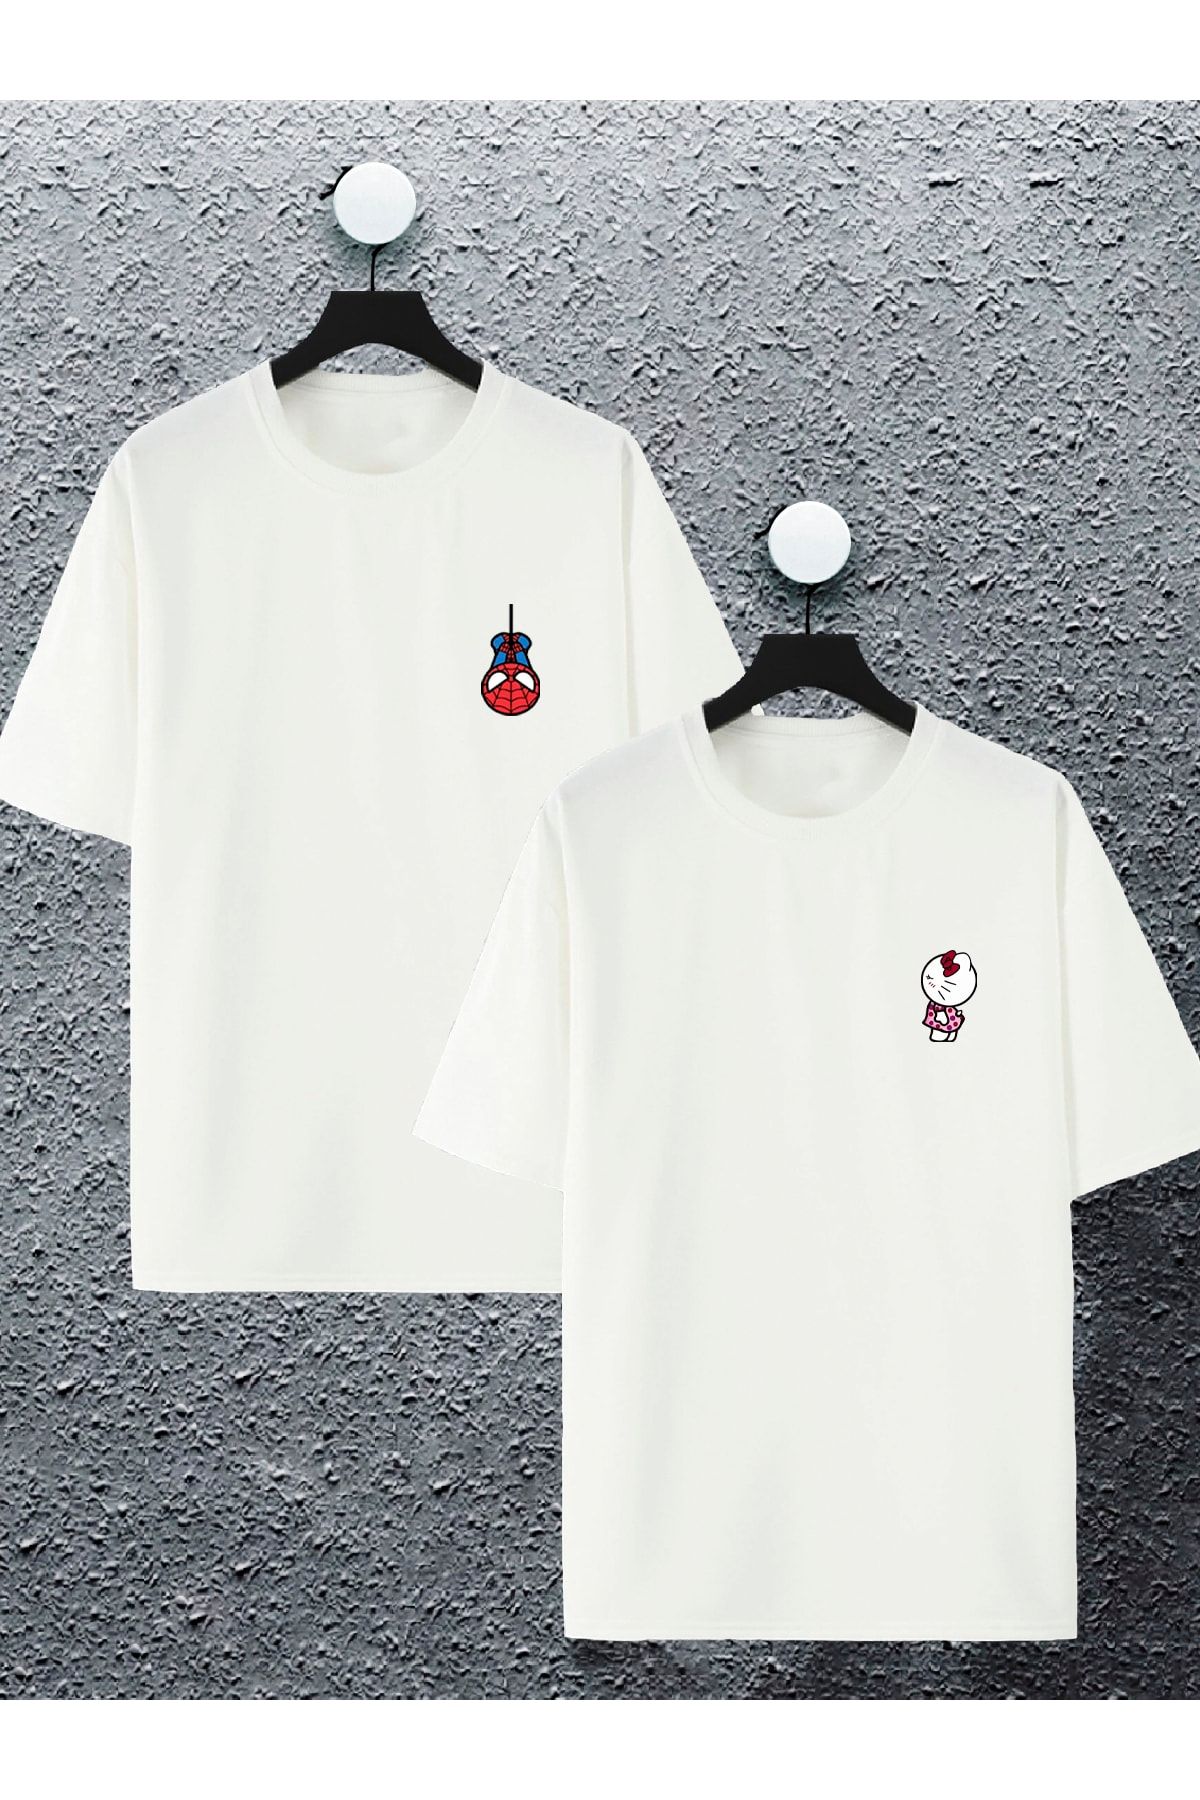 Joza Outdoors Kadın Erkek Spiderman Hello Kitty Baskılı Sevgili Çift Kombini Tasarım Oversize T-shirt 2li Set